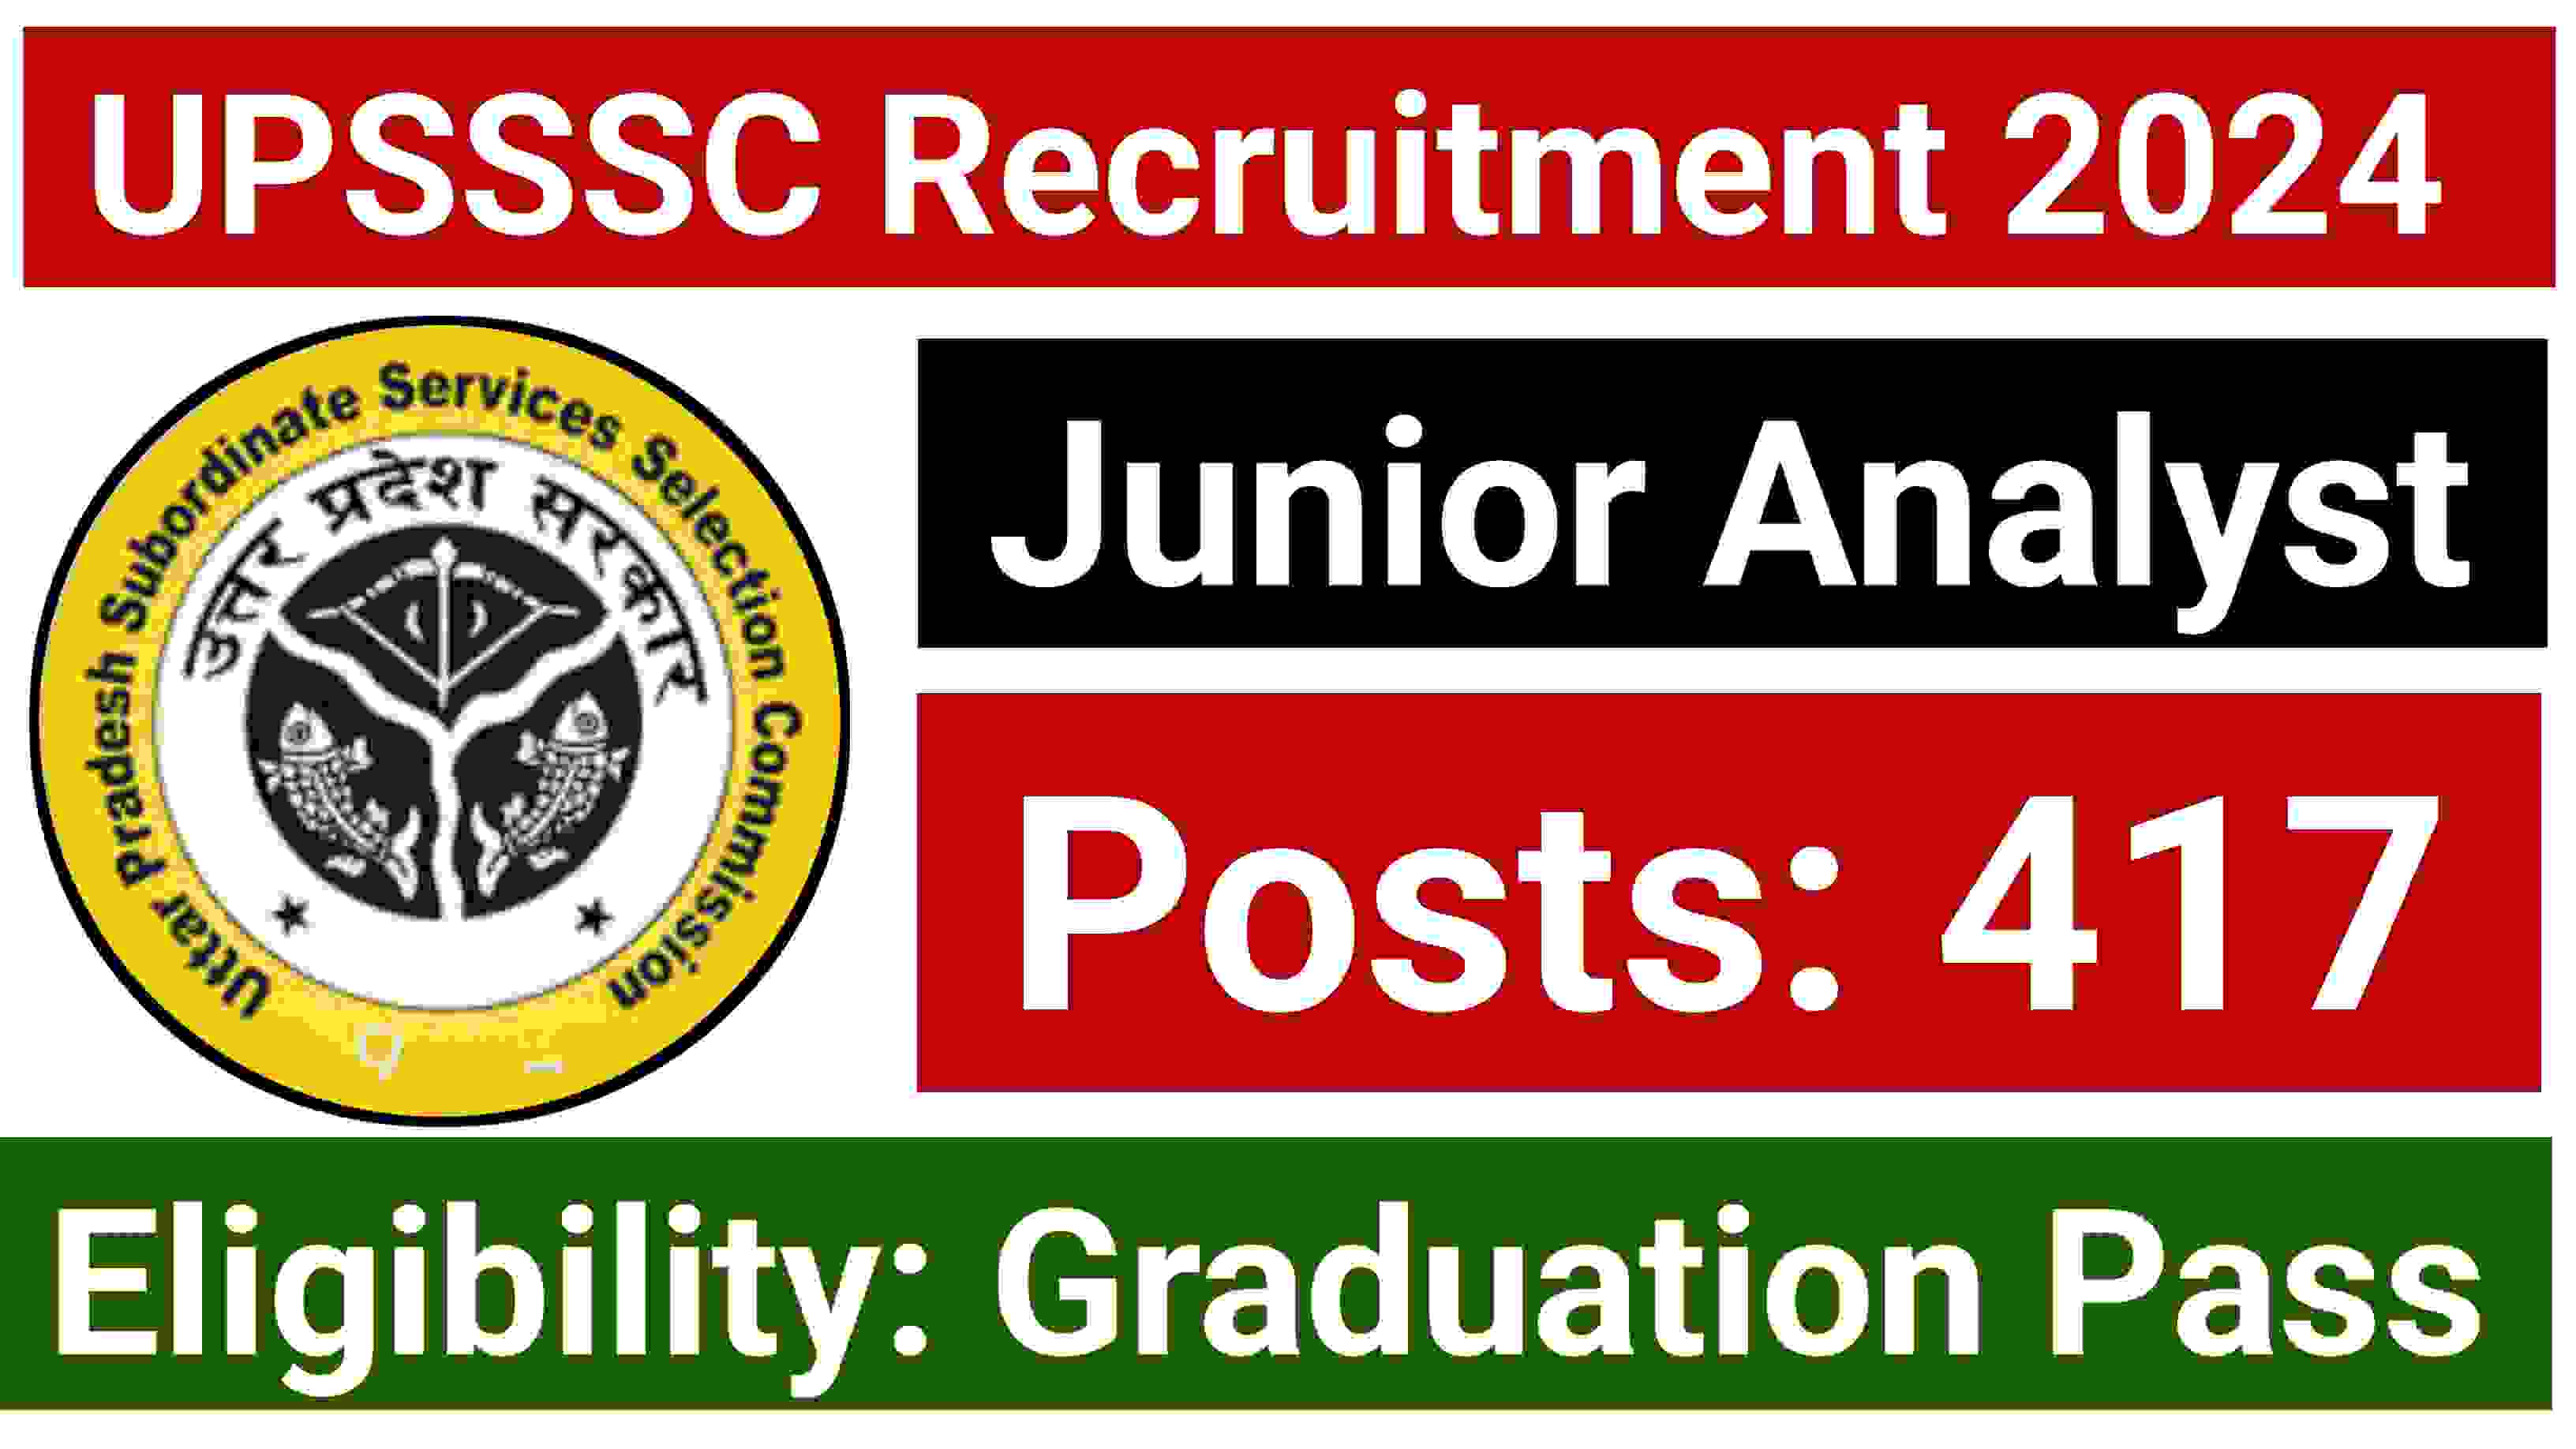 UPSSSC Junior Analyst Recruitment 2024 Notification